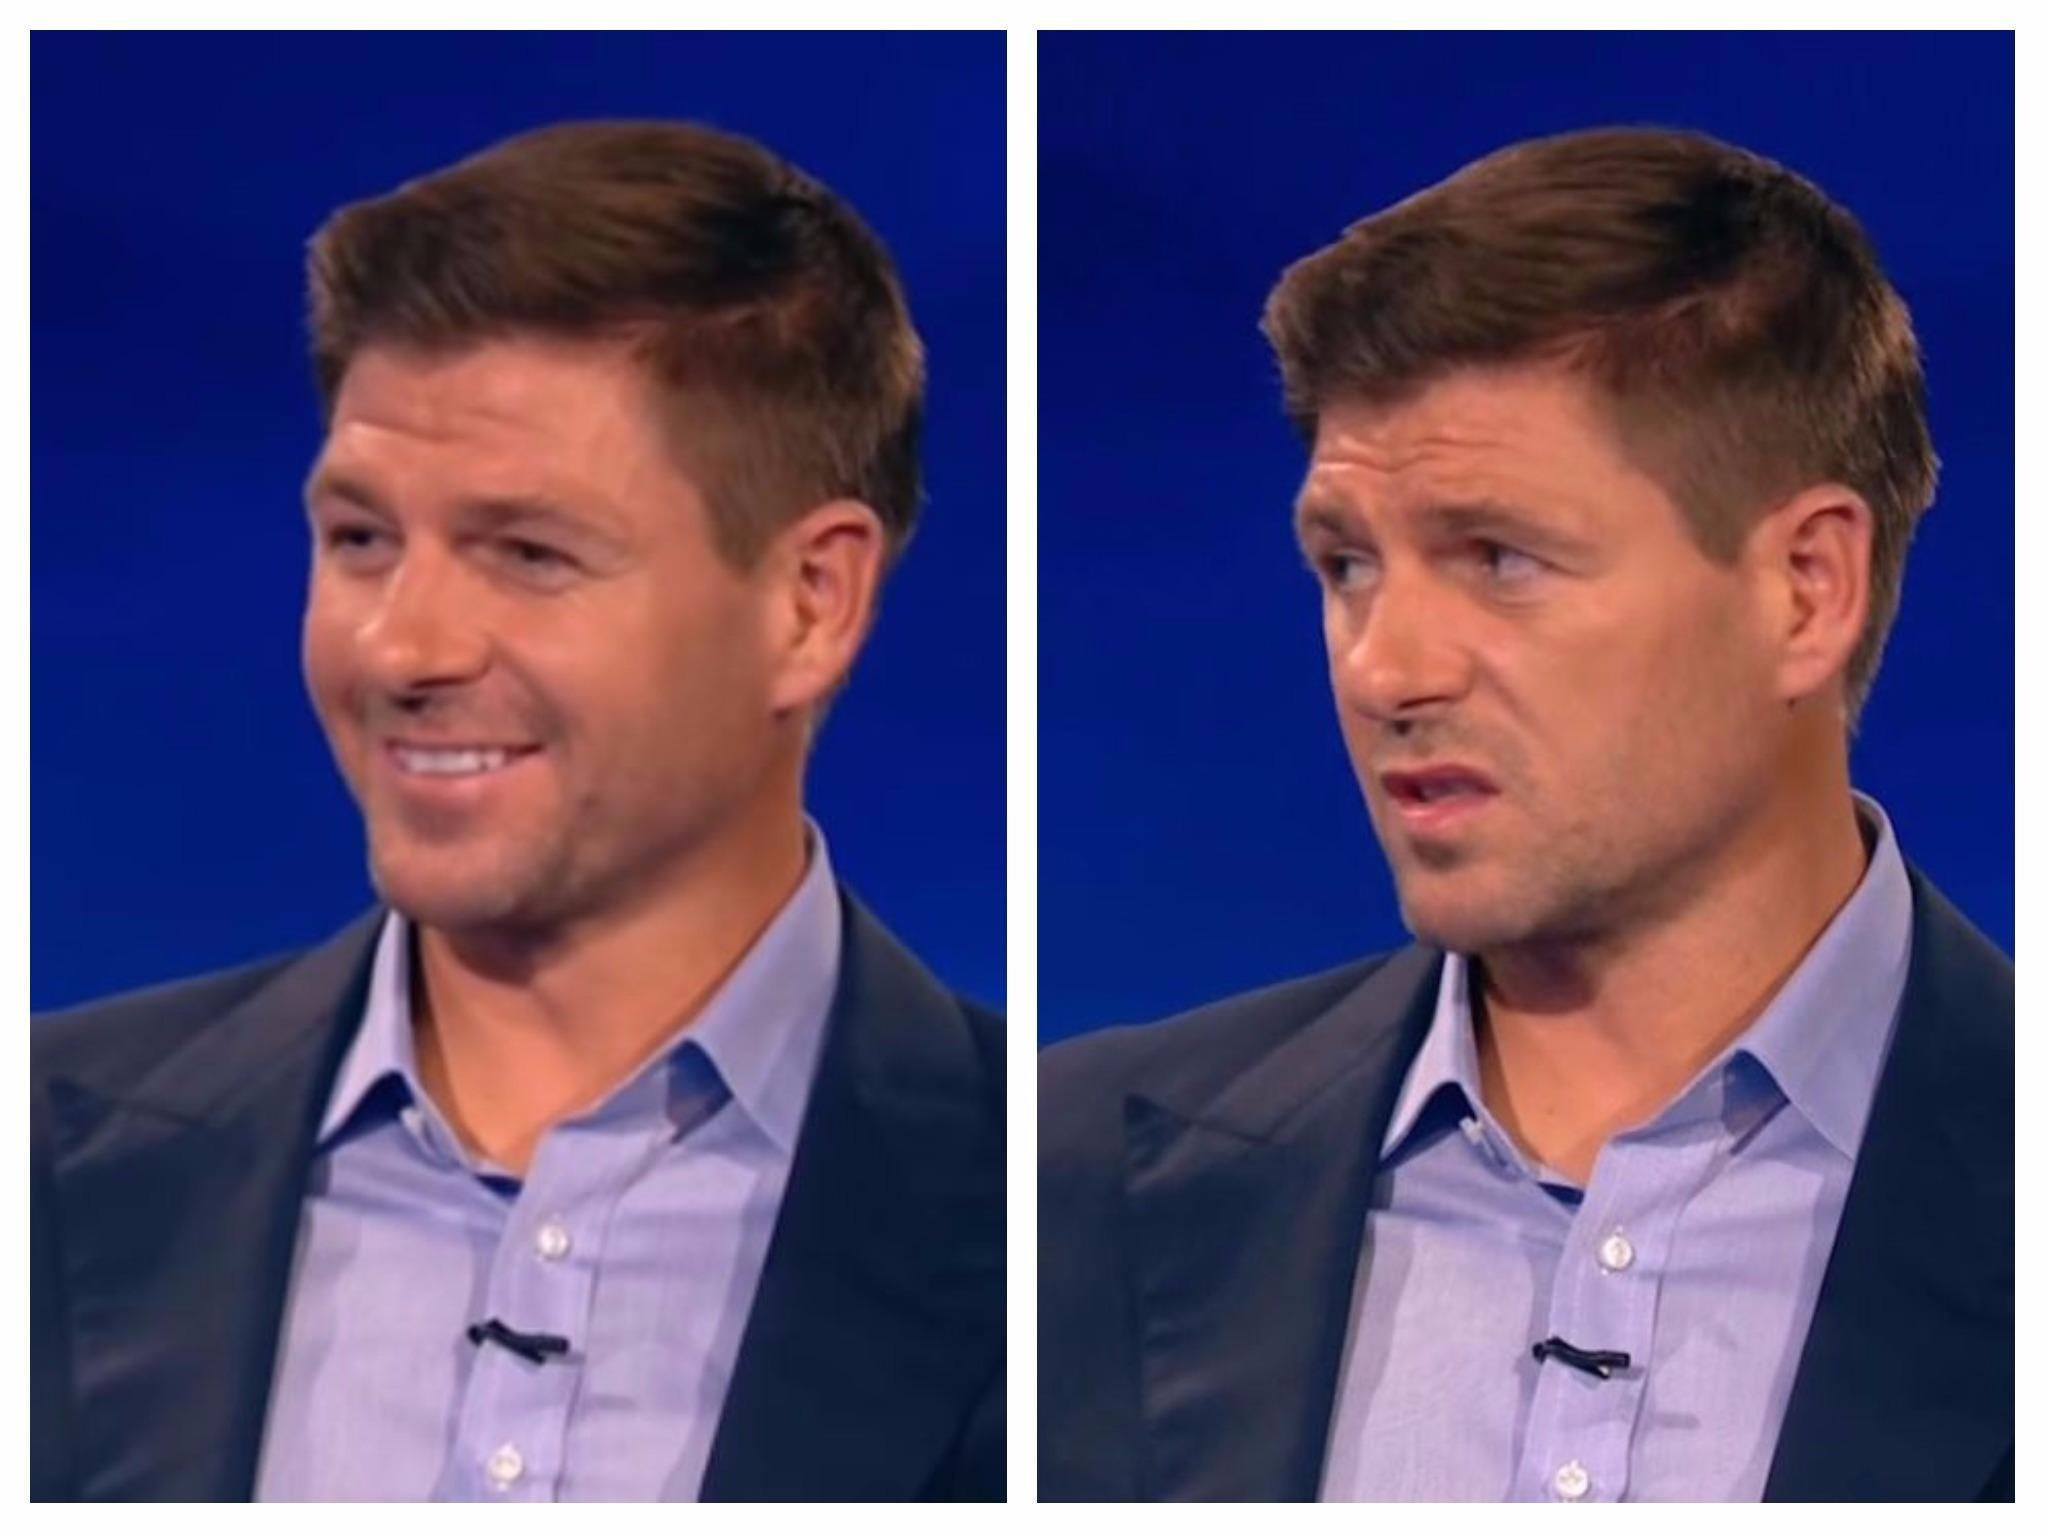 Gary Lineker pressed Steven Gerrard twice on his flirtation with Chelsea